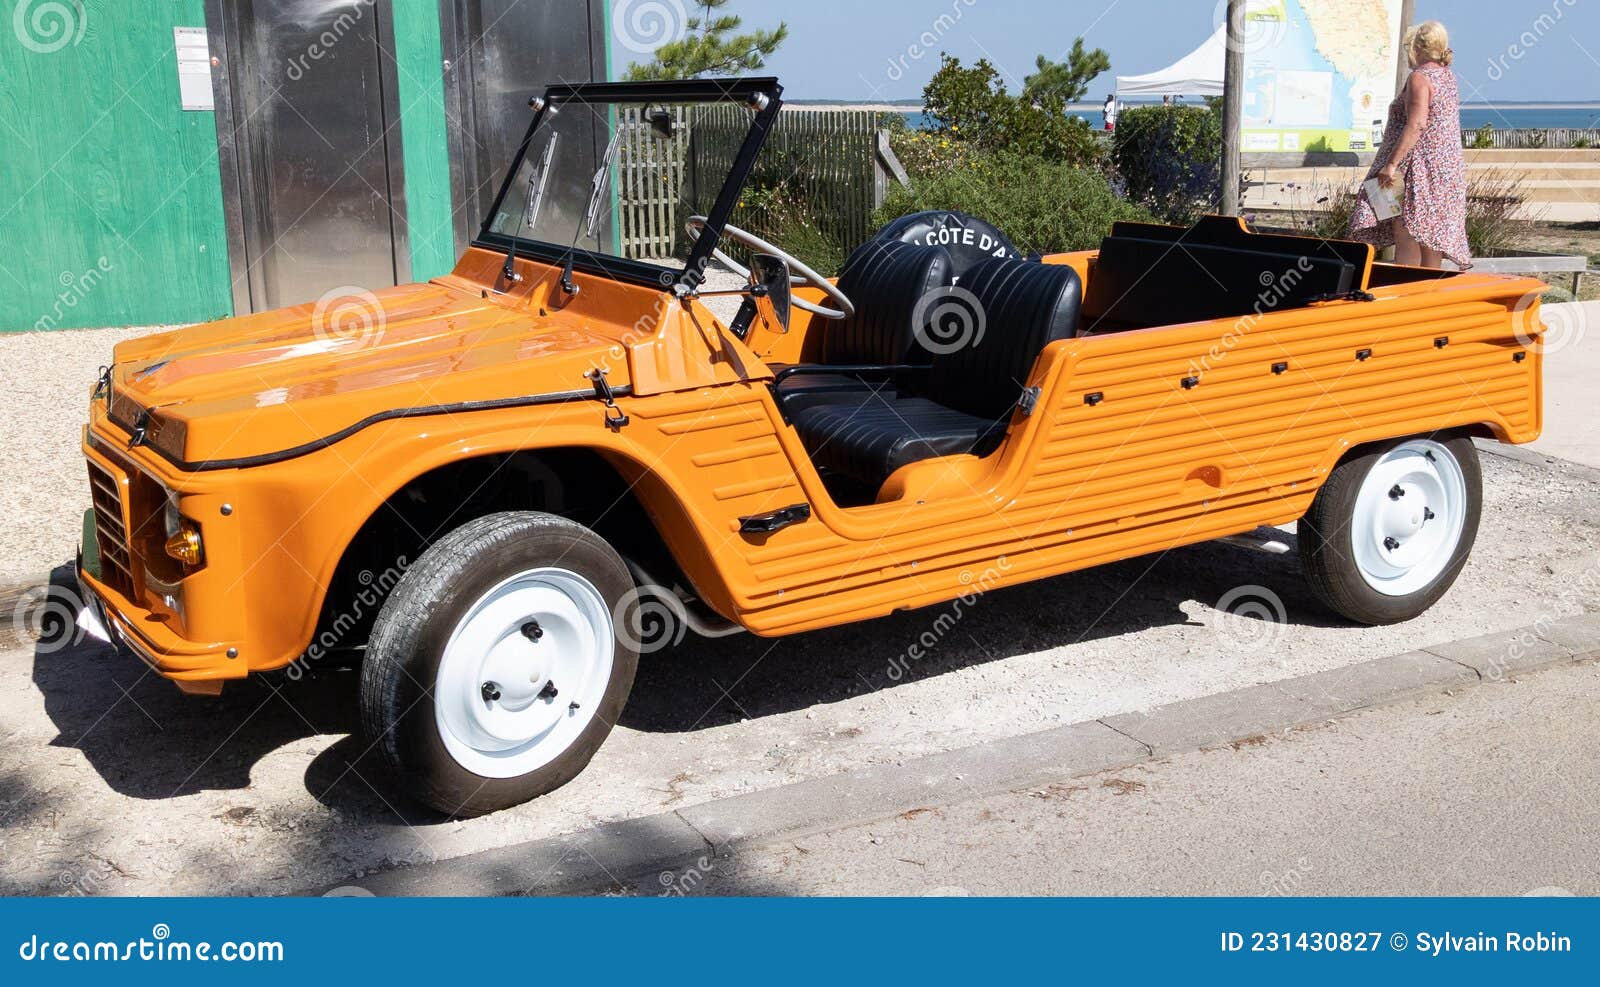 Details about   CITROEN MEHARI orange Advertising French old car BANANIA jeep tour de France 70 